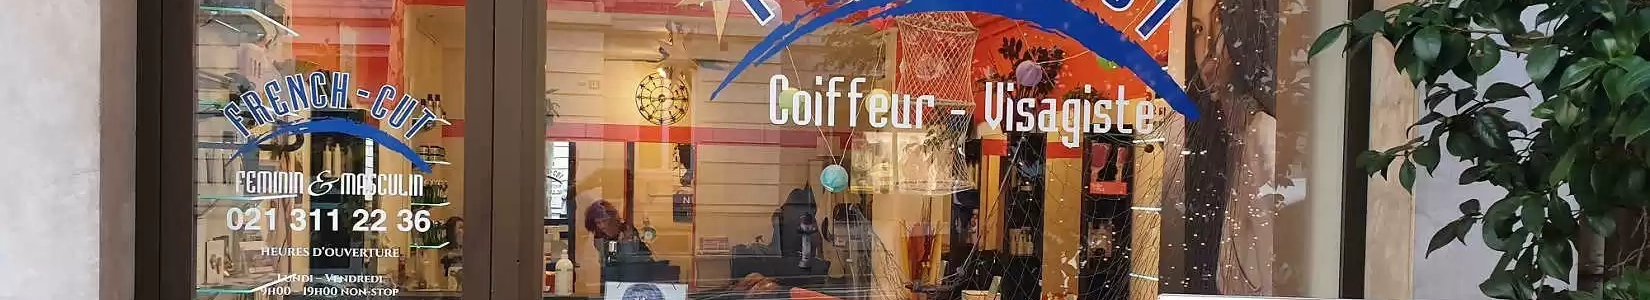 French-cut coiffure Coiffure homme à Lausanne